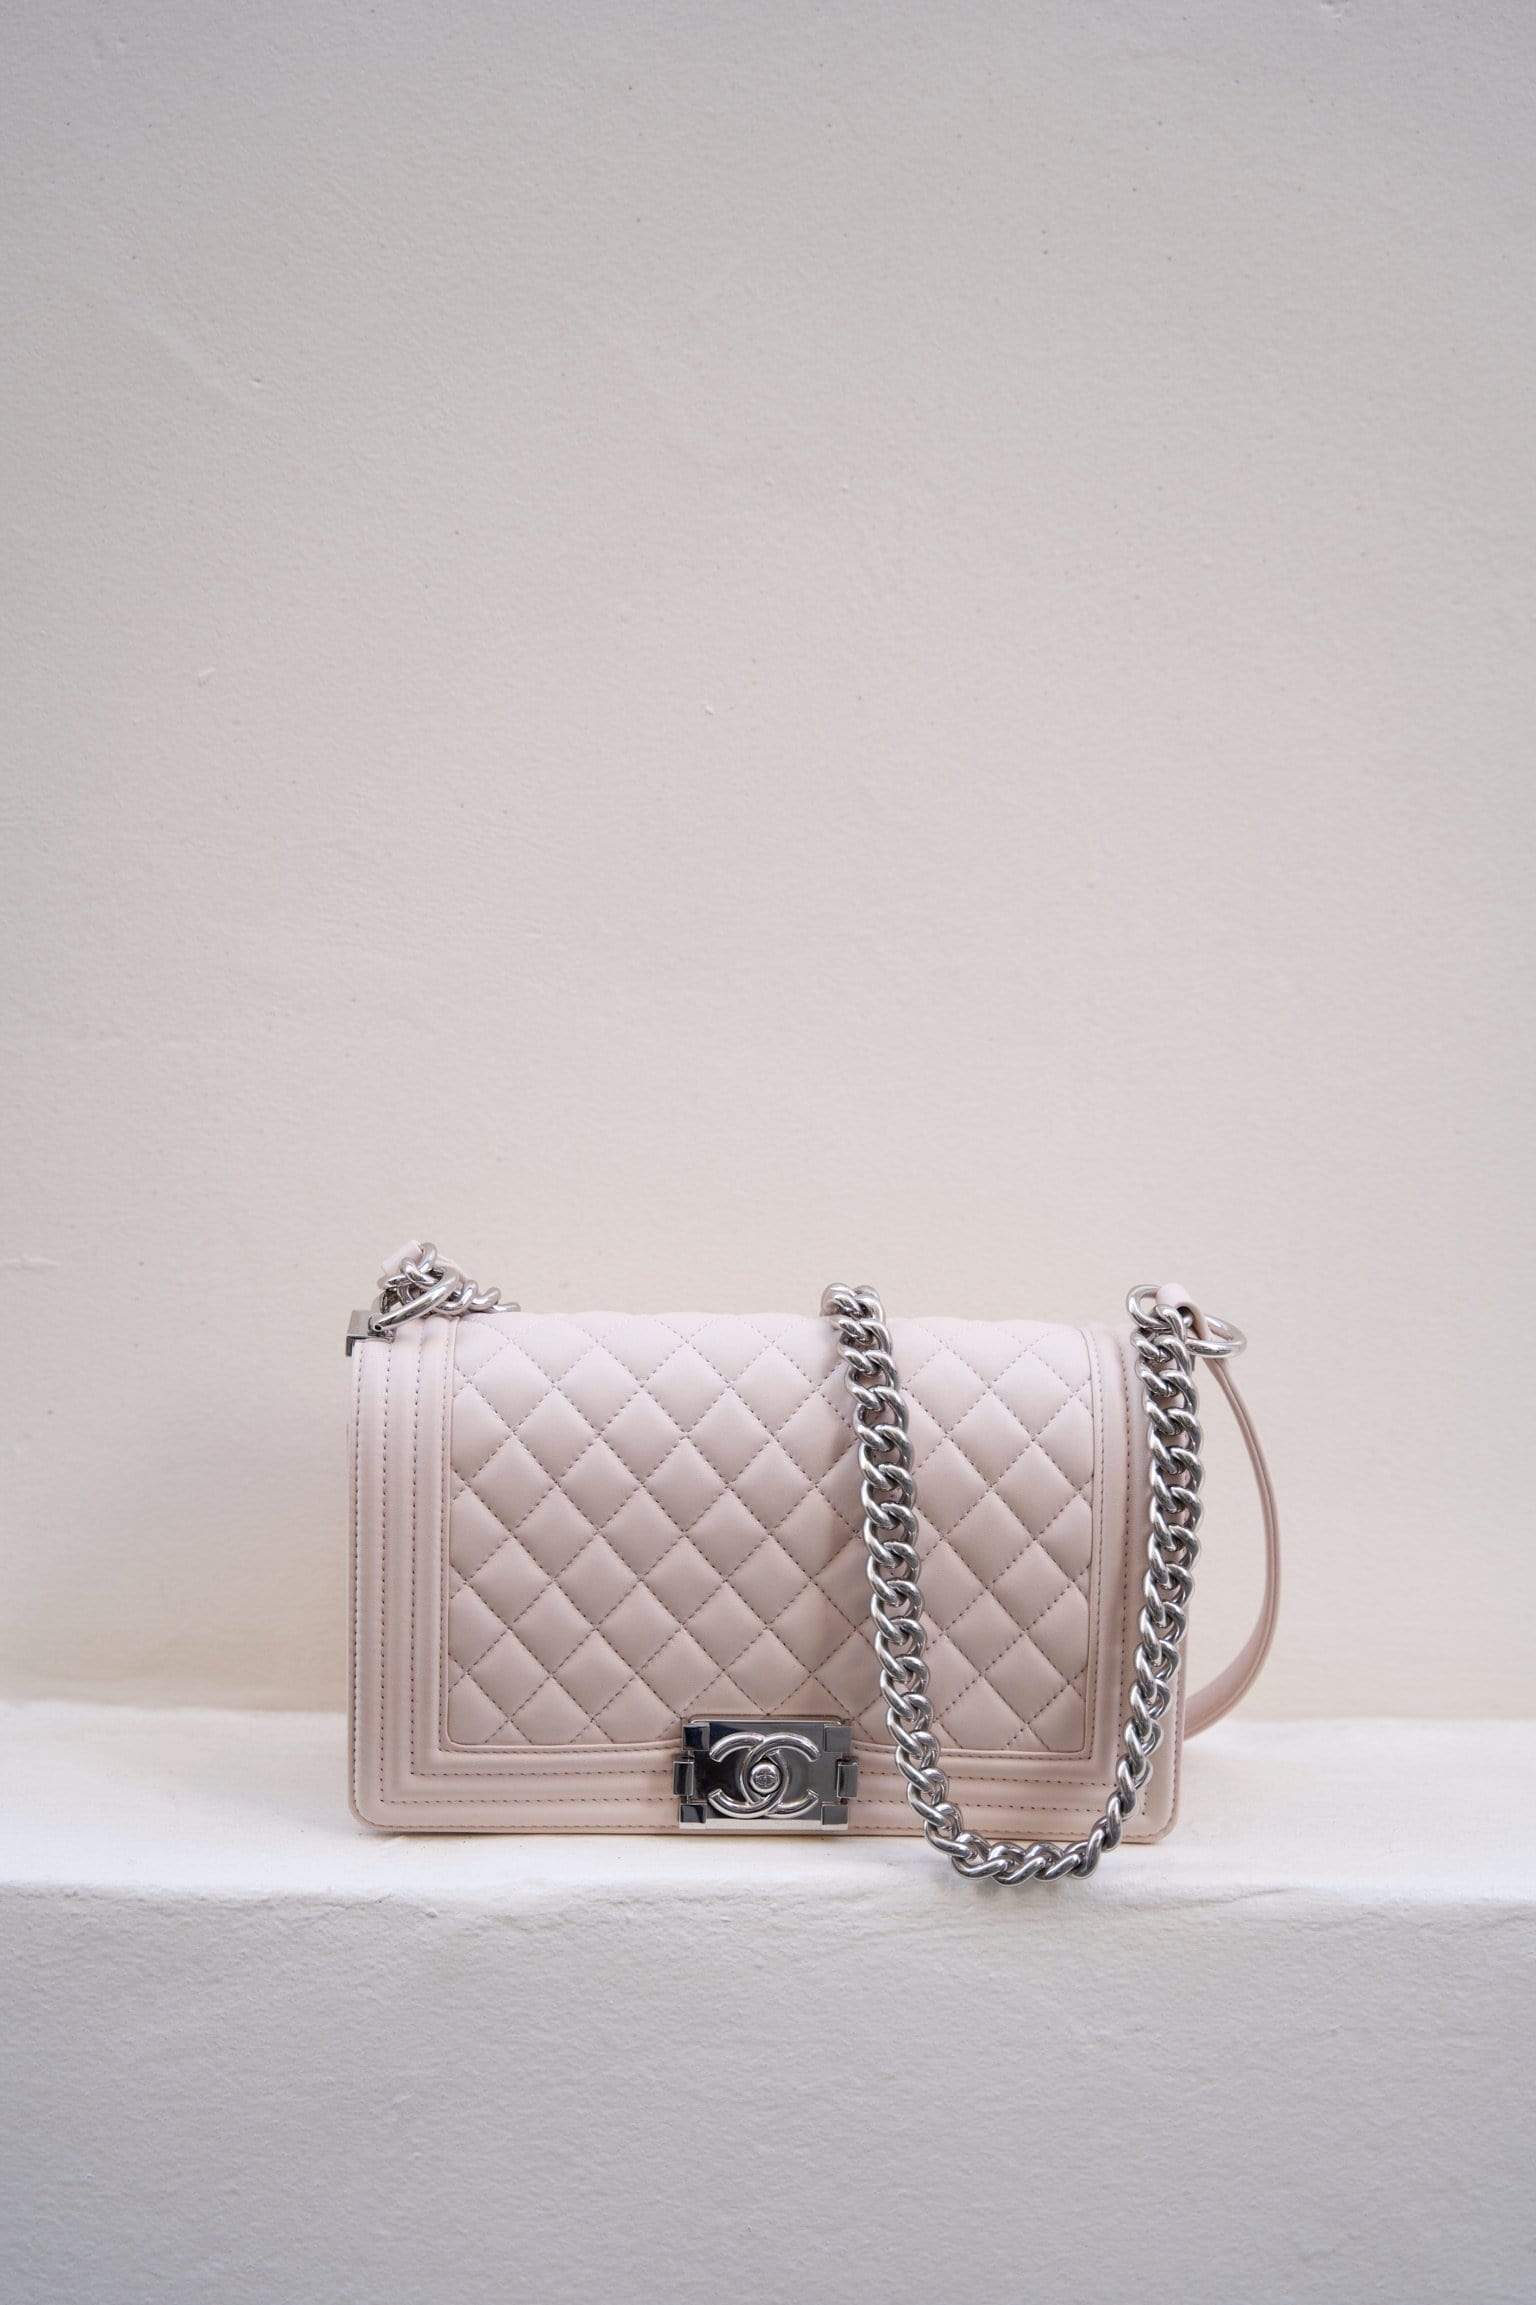 Chanel Le Boy Medium Bag Pink Beige with Silver Hardware - ASL1717